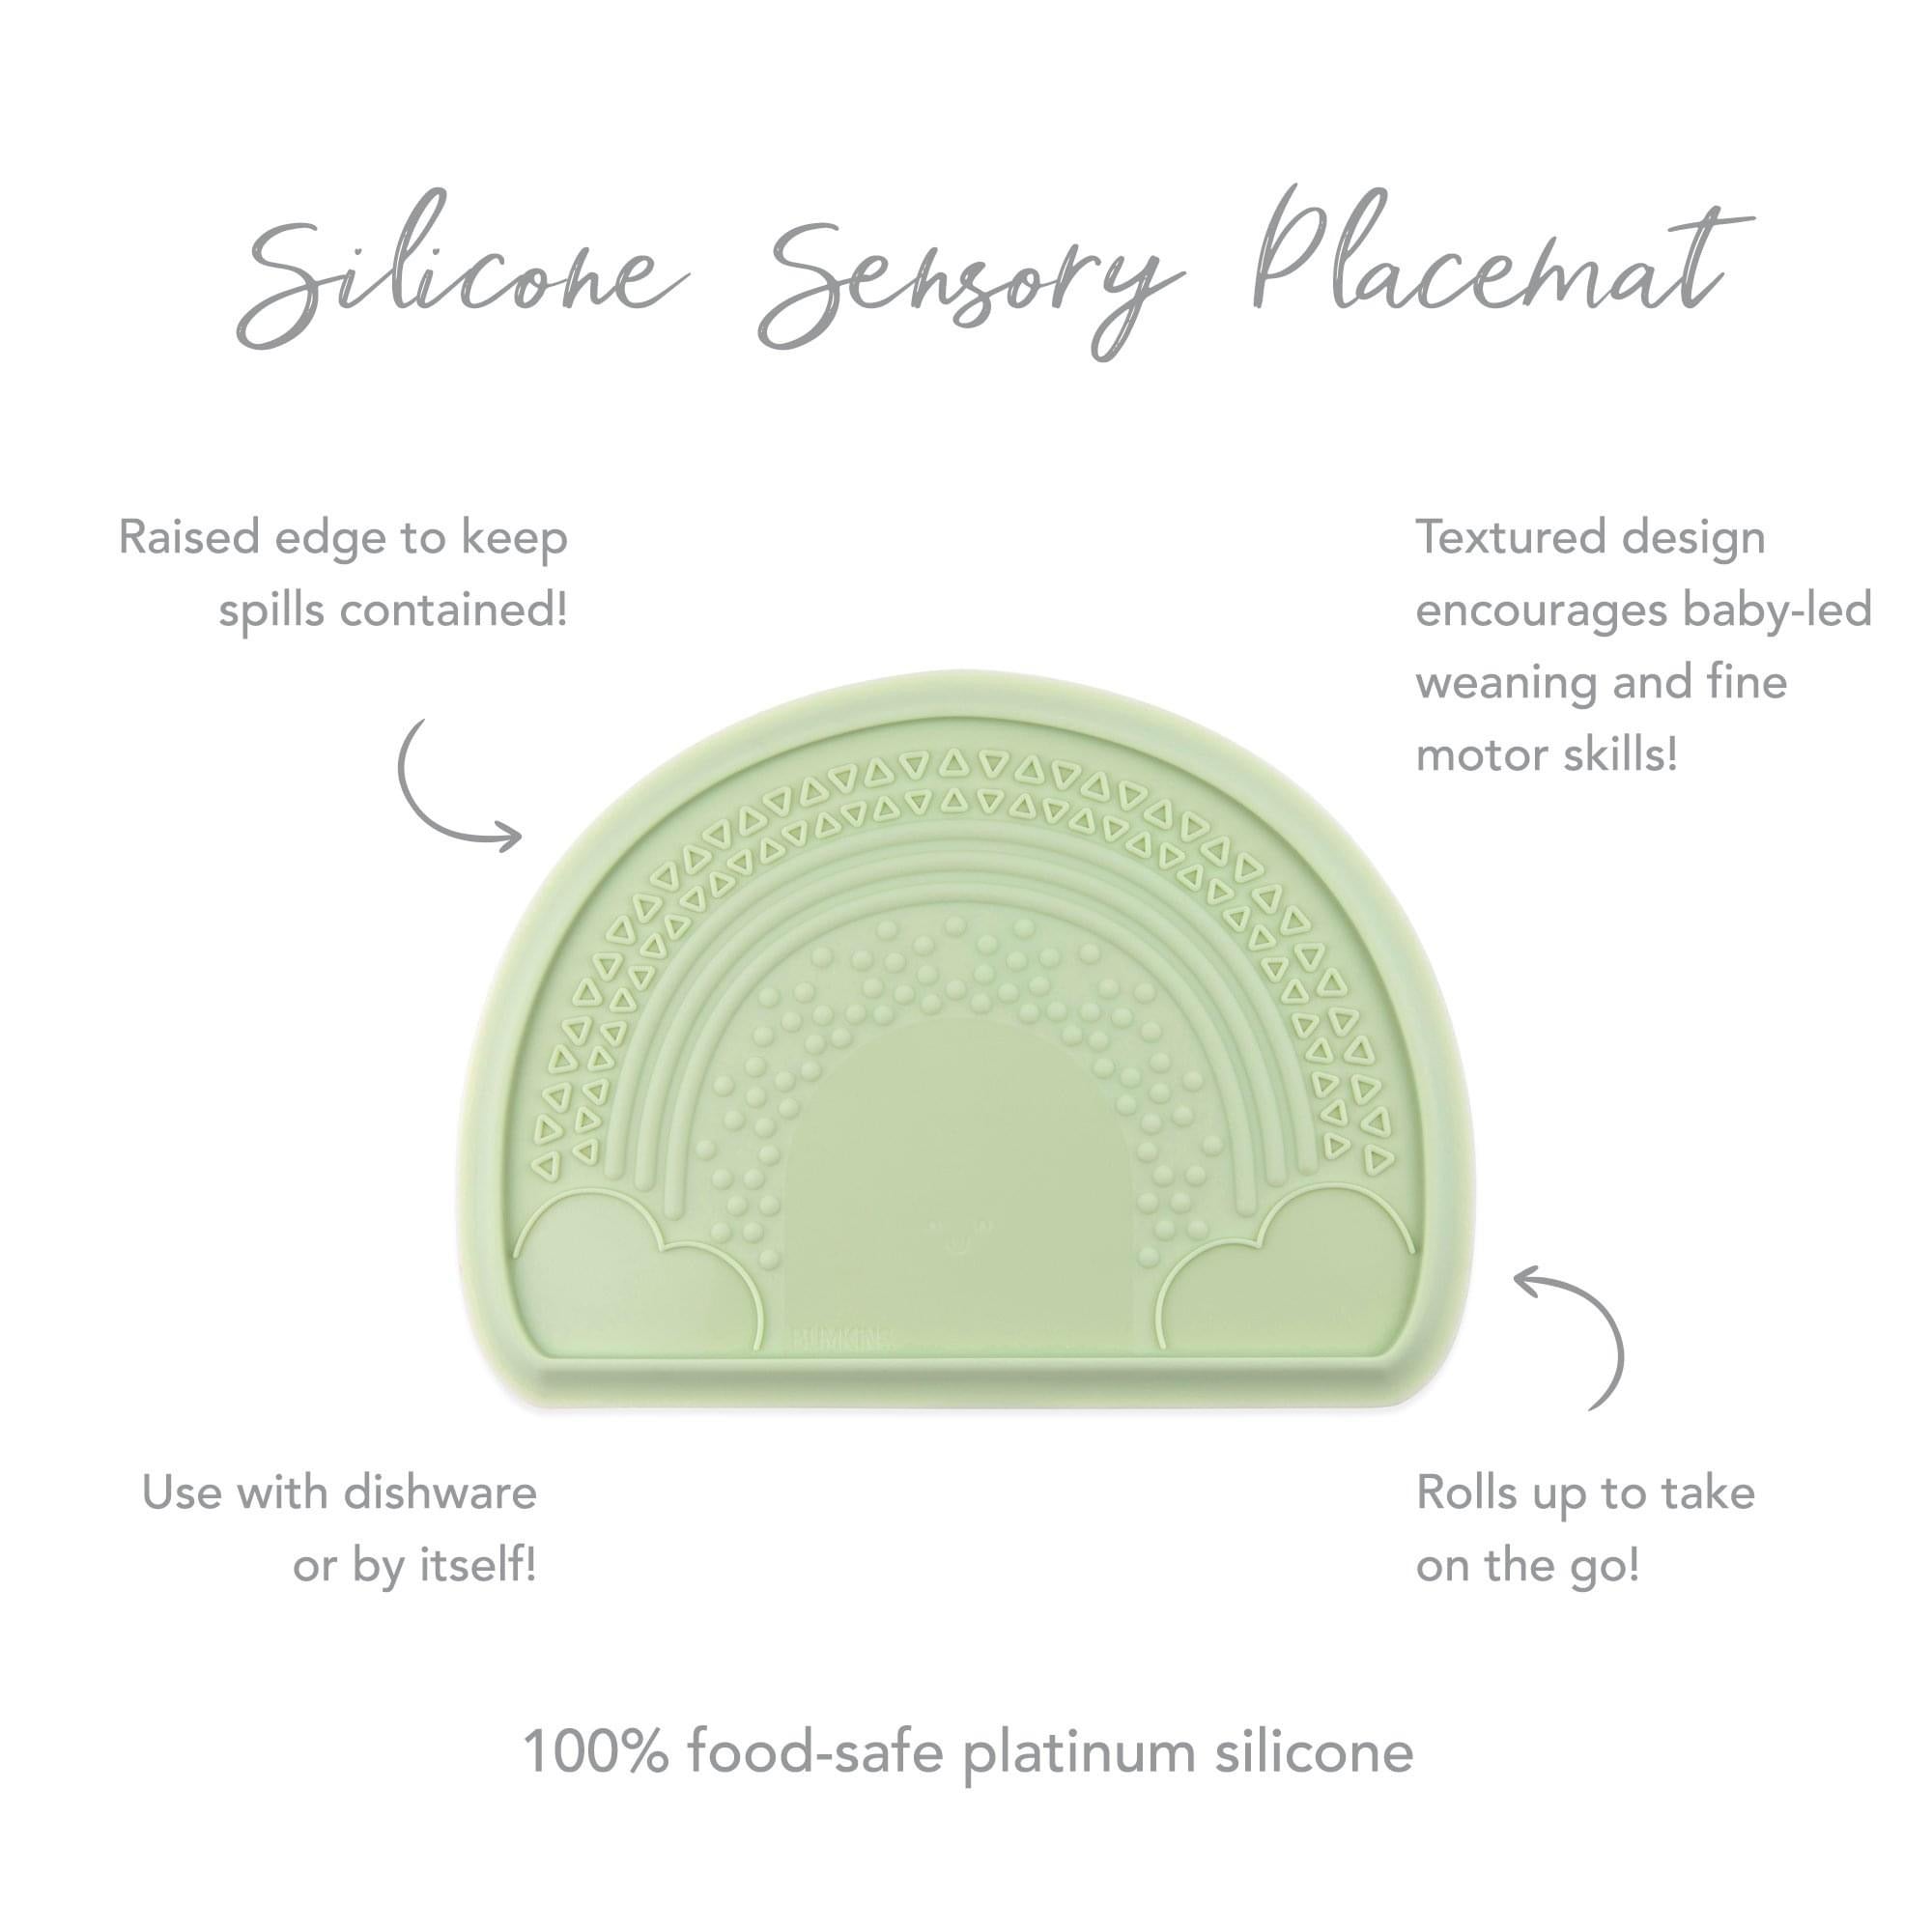 Bumkins Silicone Sensory Placemat